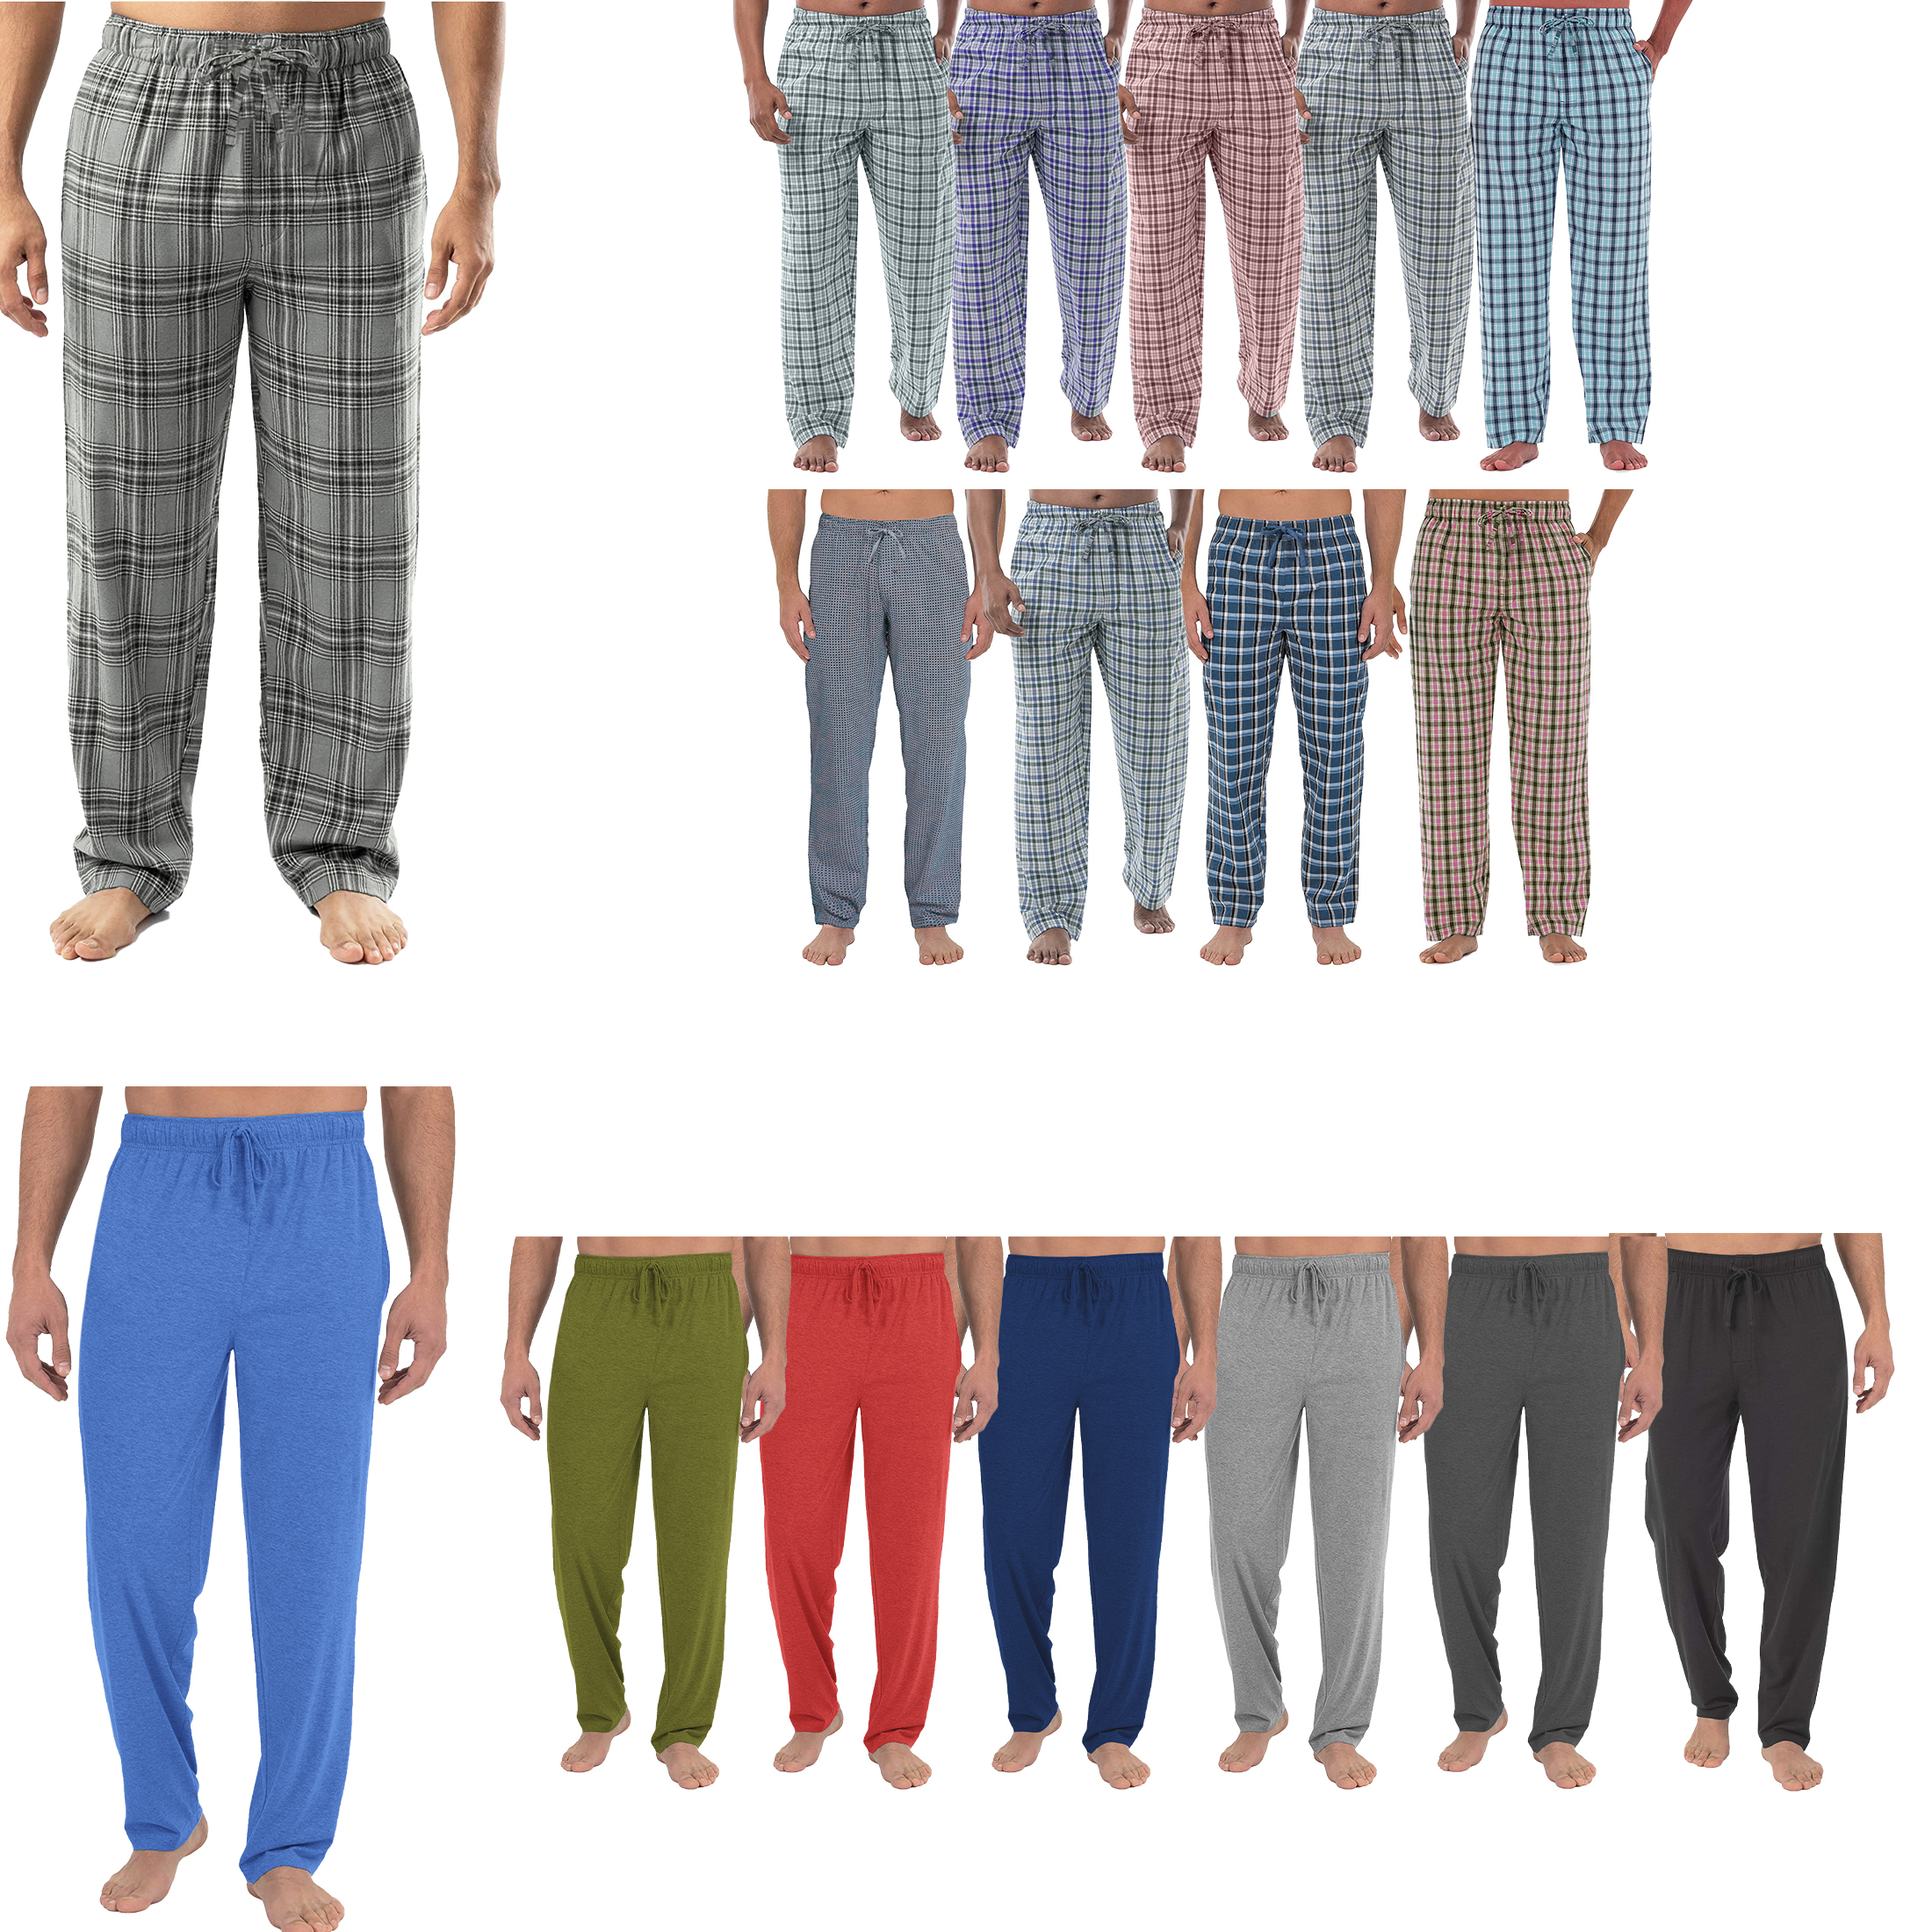 Men's Soft Jersey Knit Long Lounge Sleep Pants With Pockets - Plaid, Medium